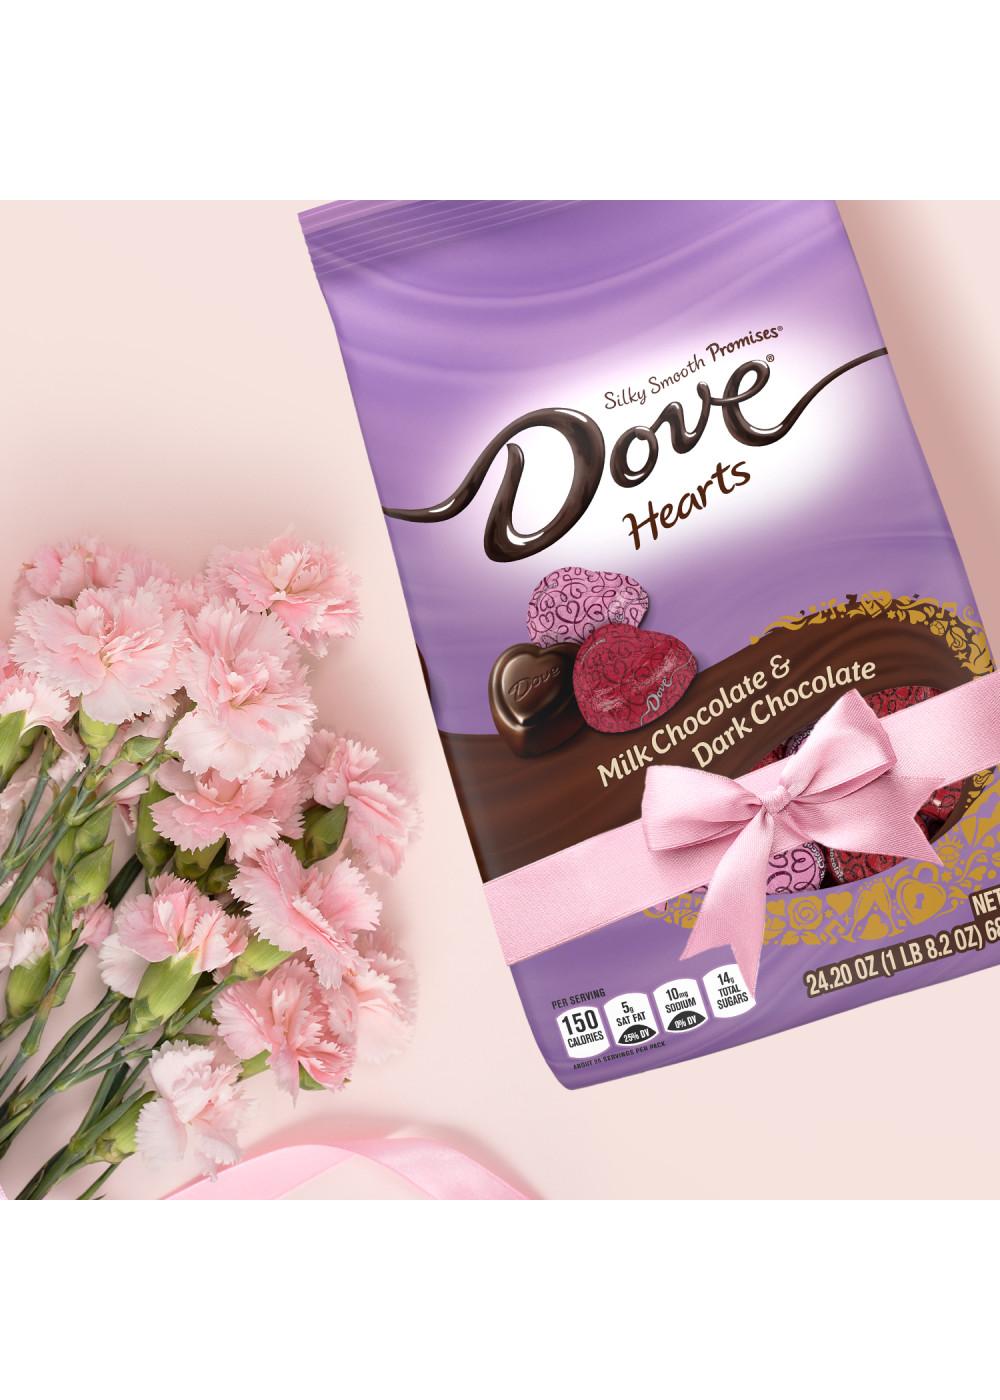 Dove Promises Hearts Milk & Dark Chocolate Valentine's Candy; image 4 of 7